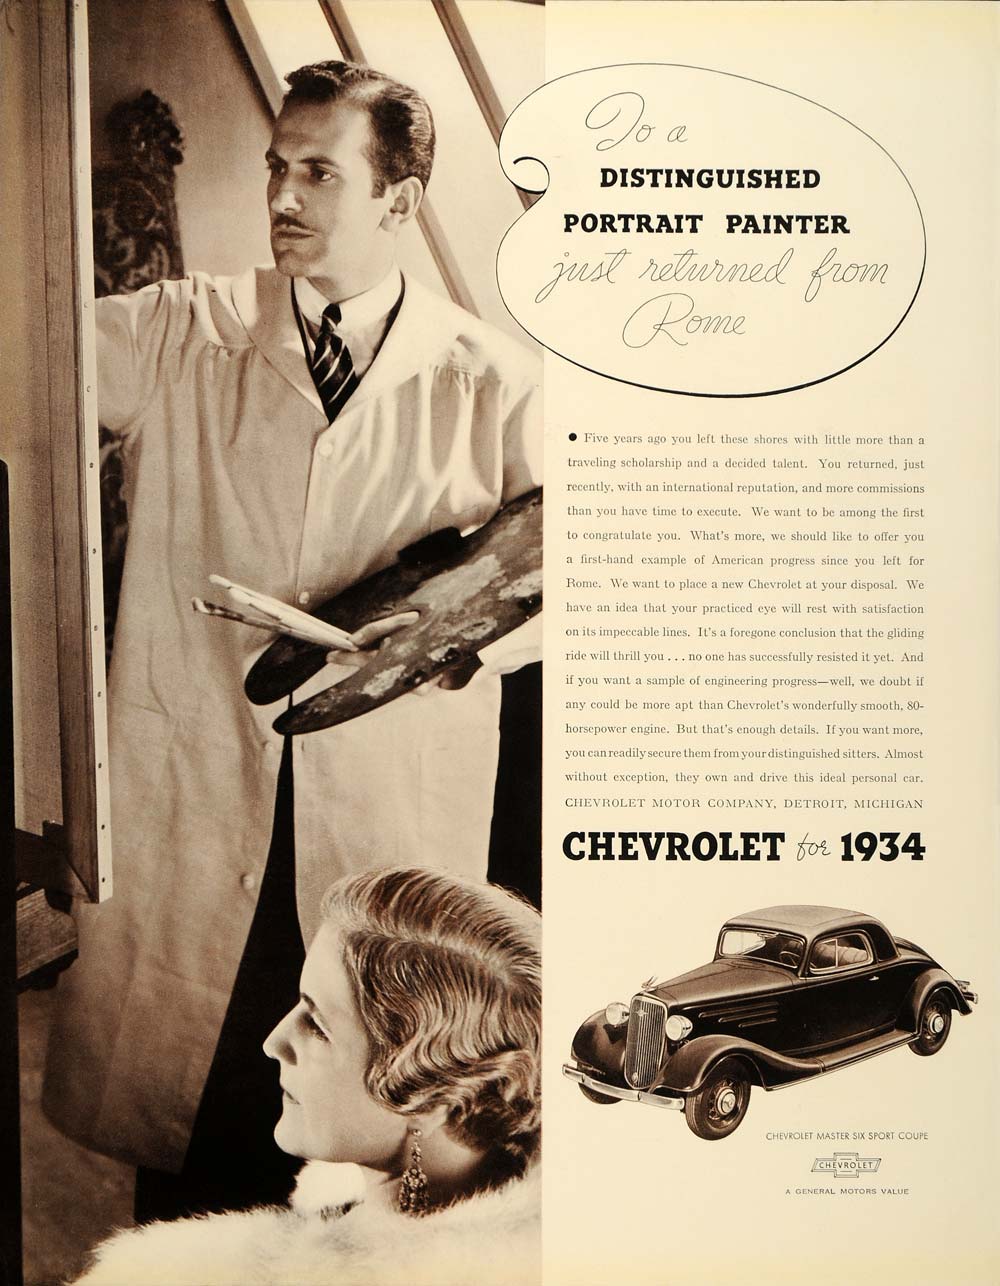 1934 Ad Chevrolet Antique Cars Portrait Painter Rome - ORIGINAL ADVERTISING FTT9